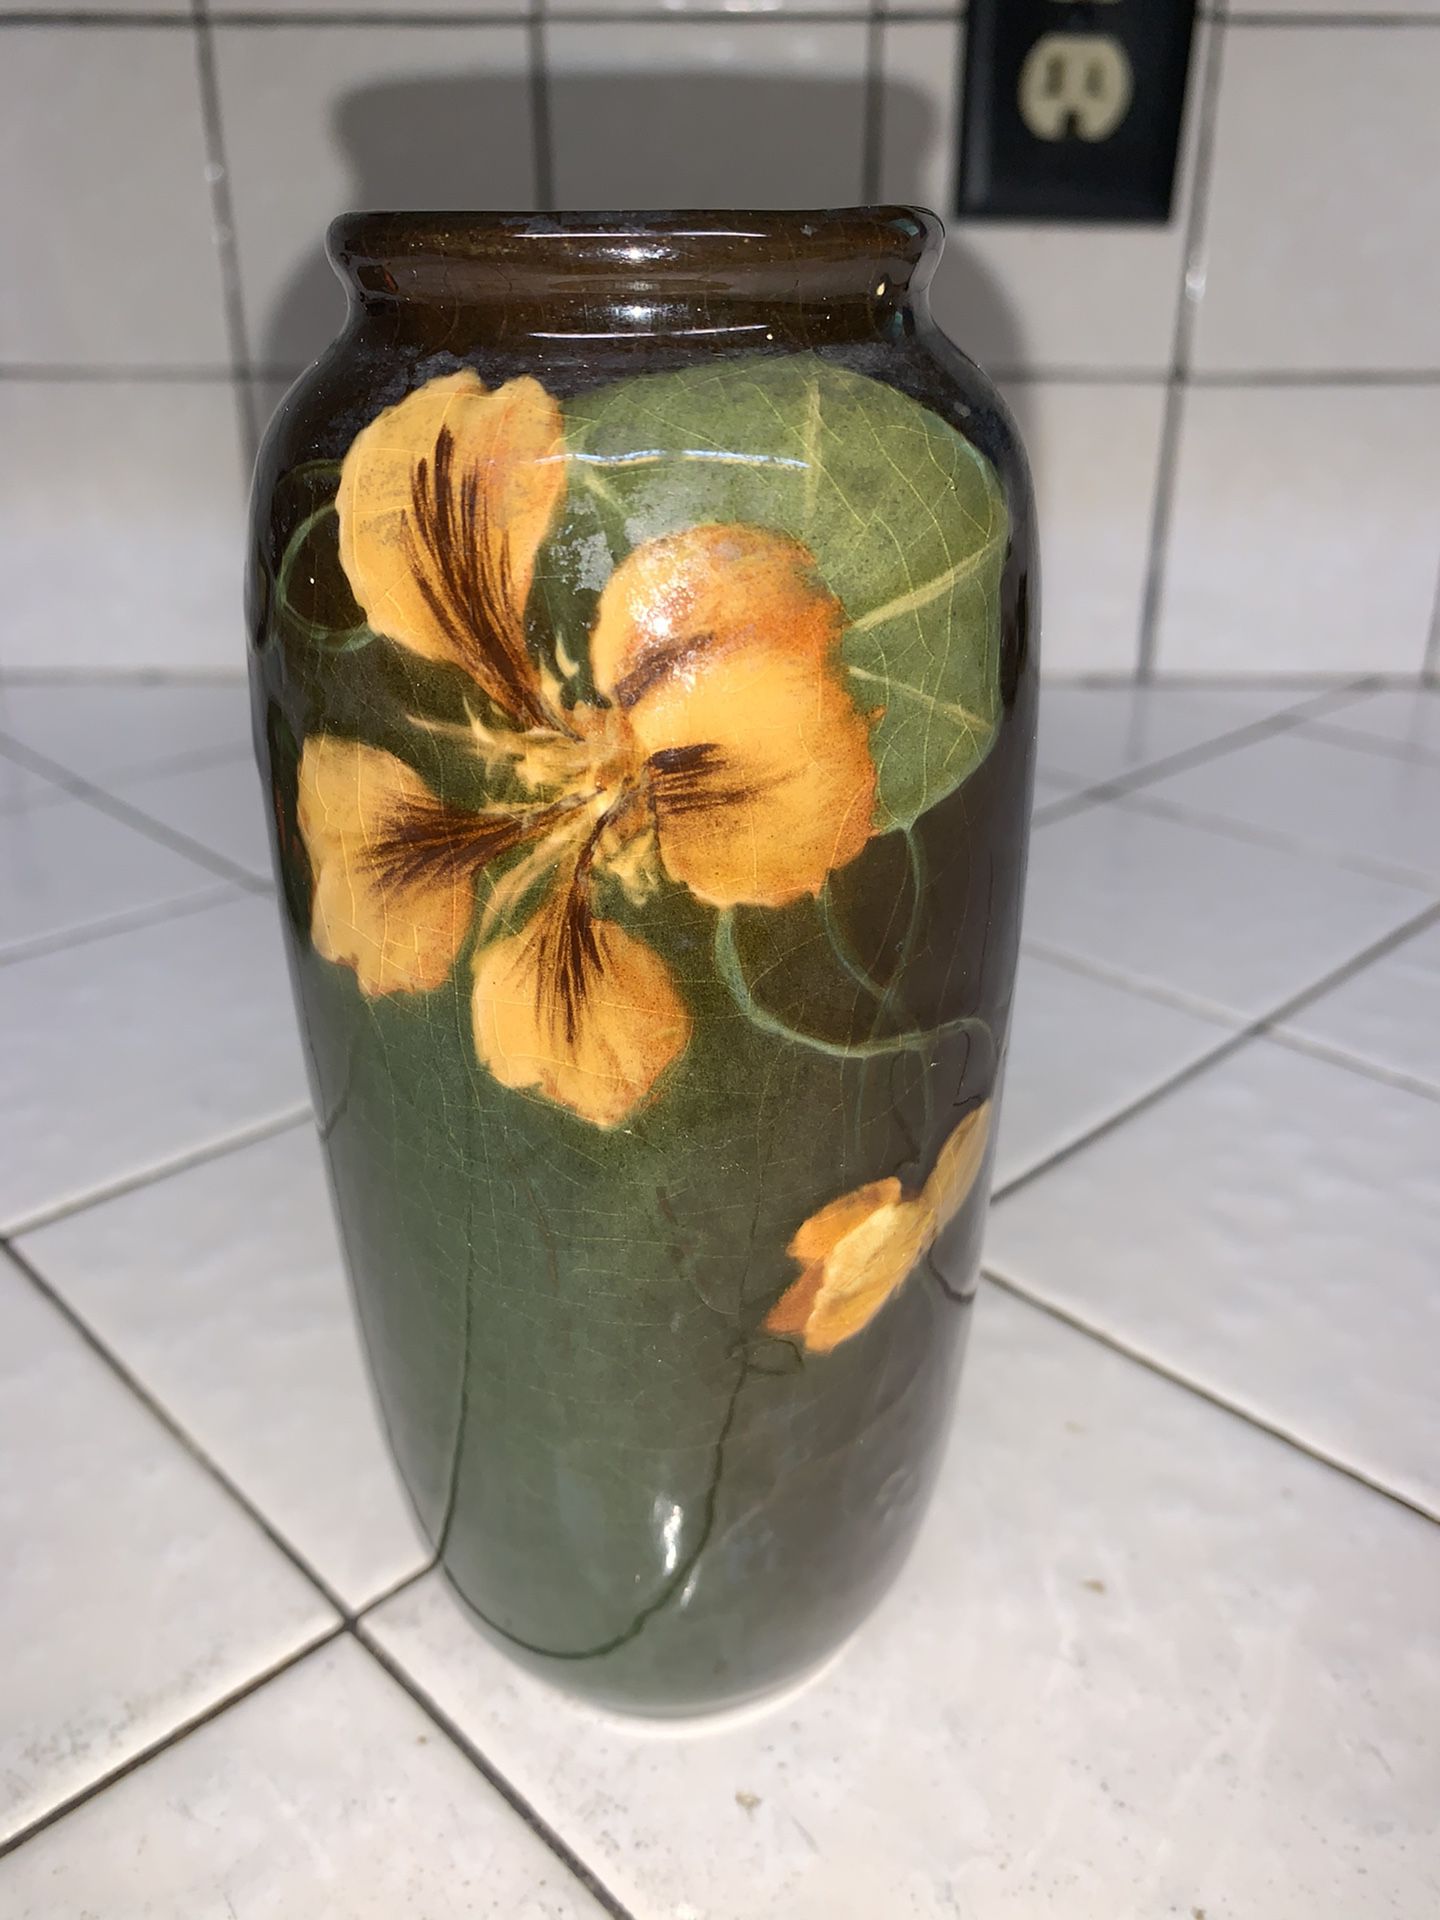 Small Green Vase